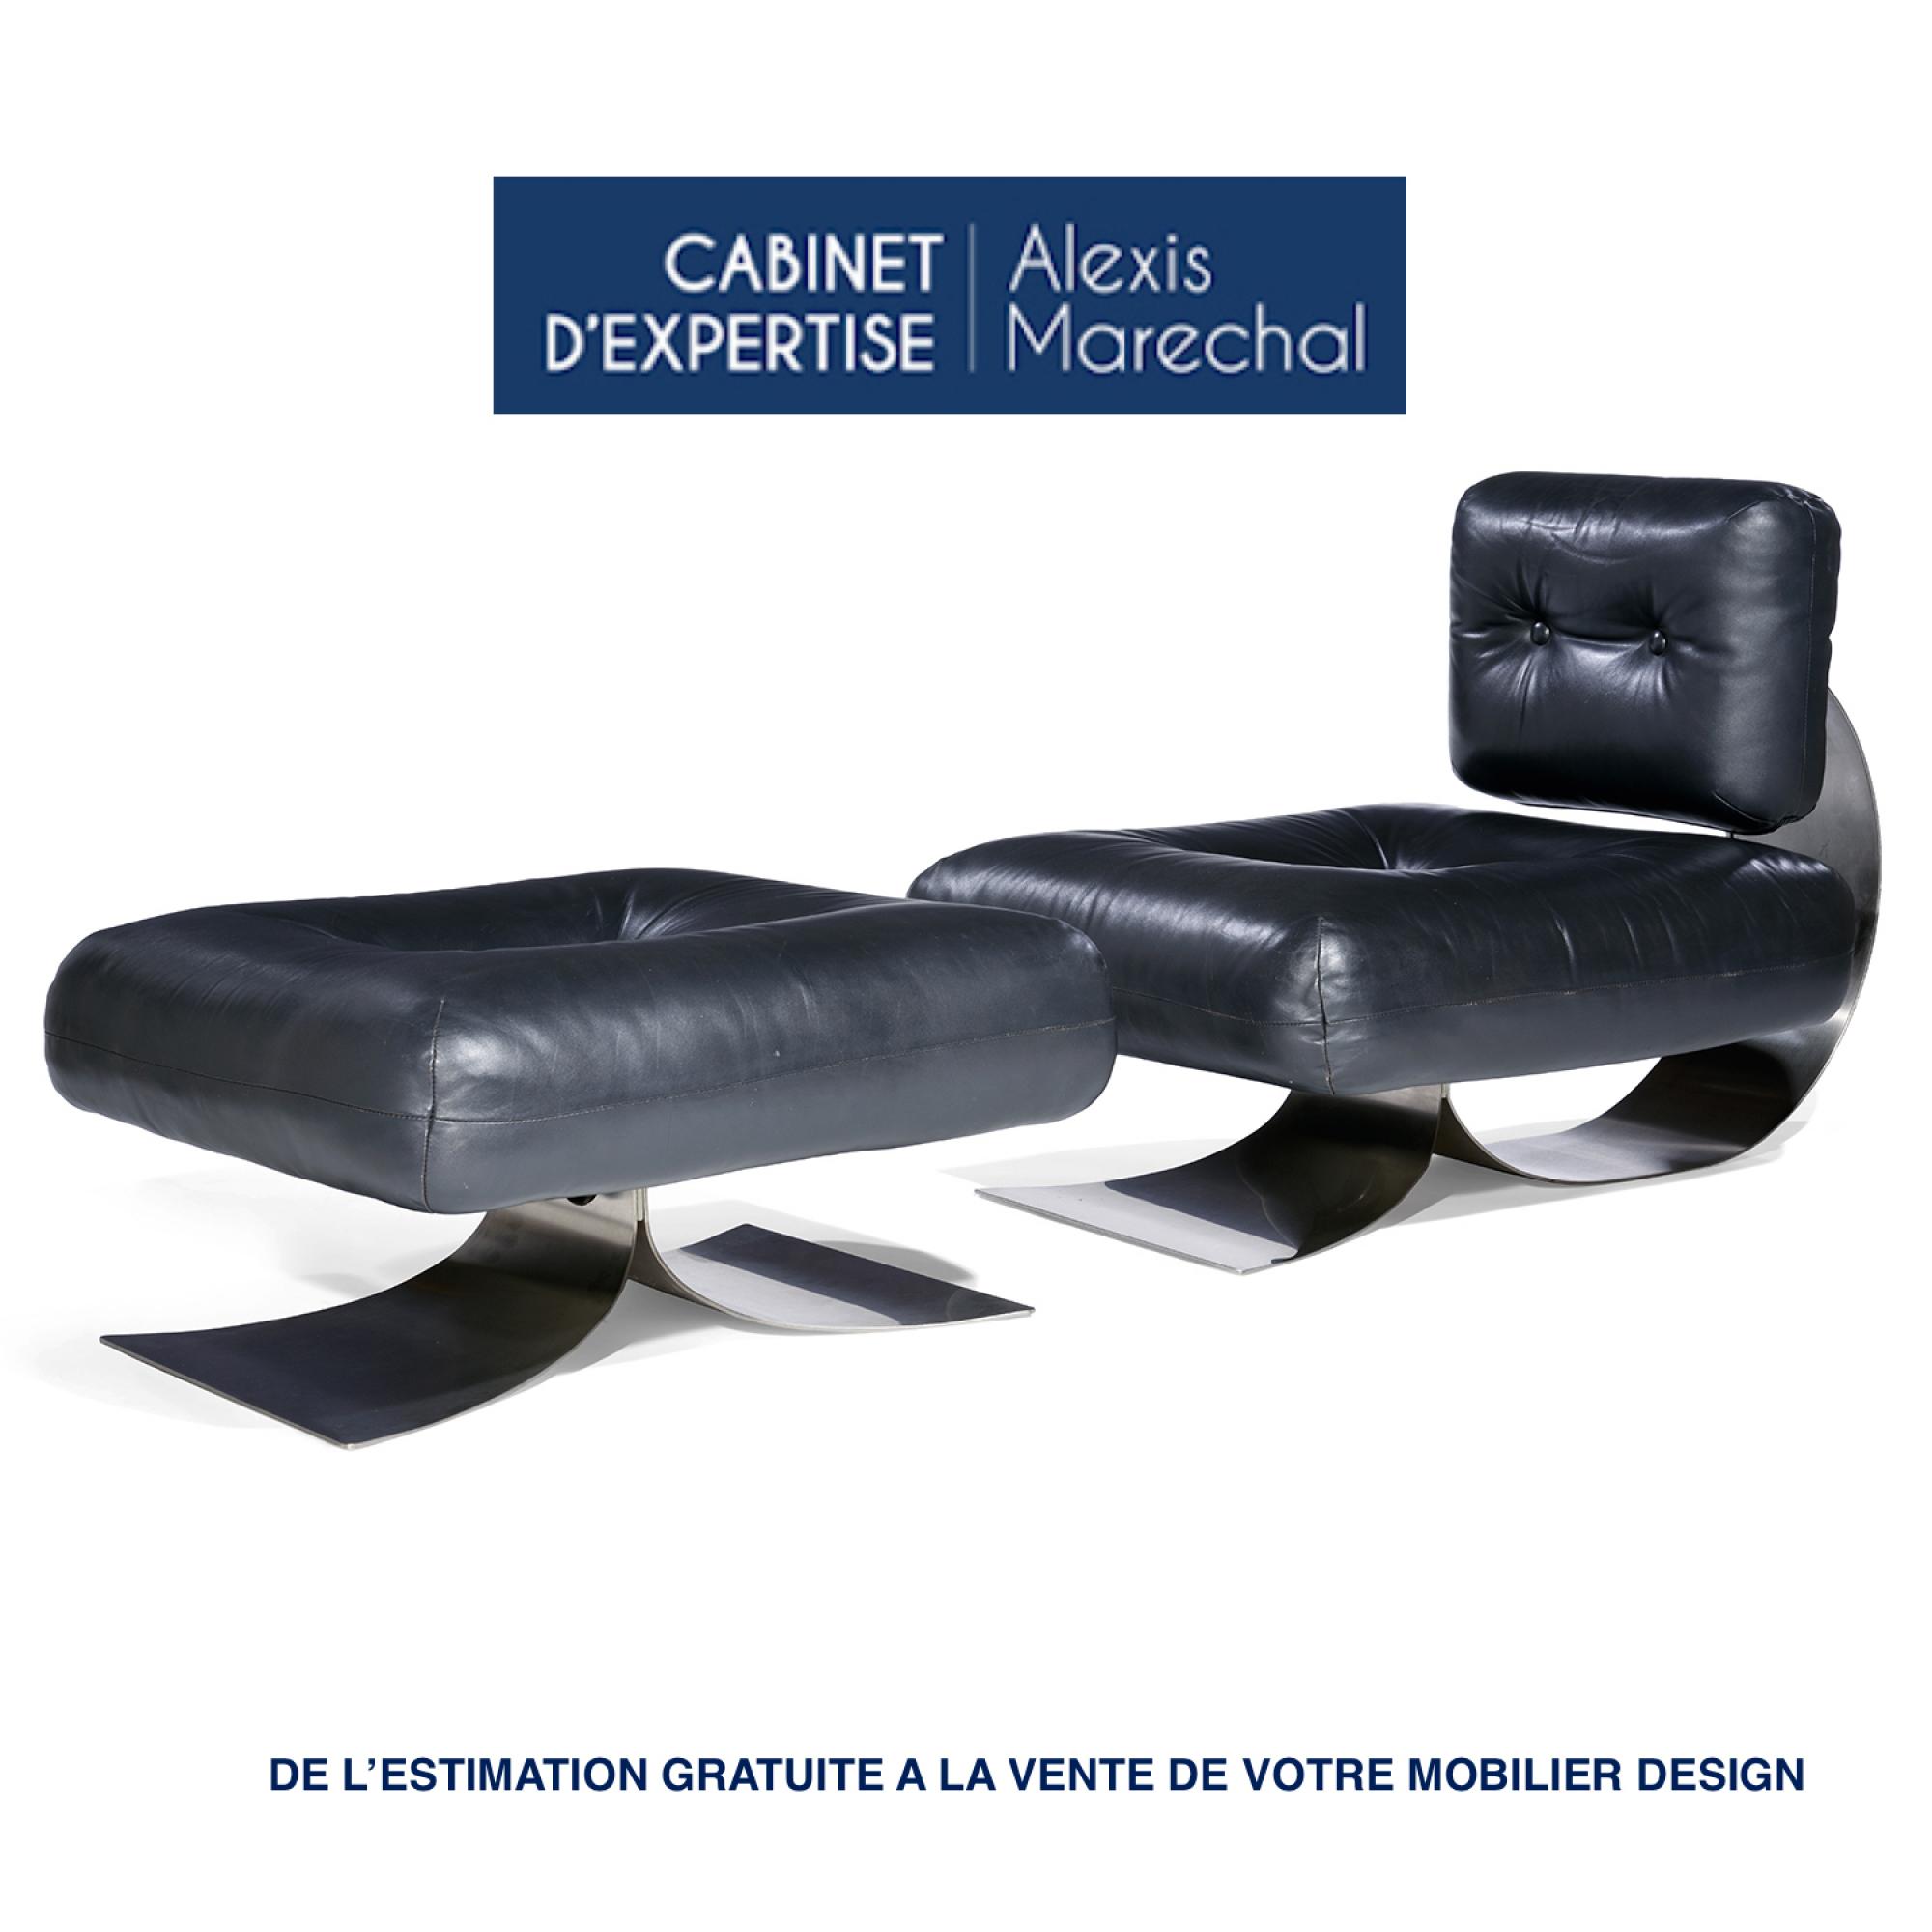  Royère Jean I Expertise fauteuil  Estimation luminaire table basse